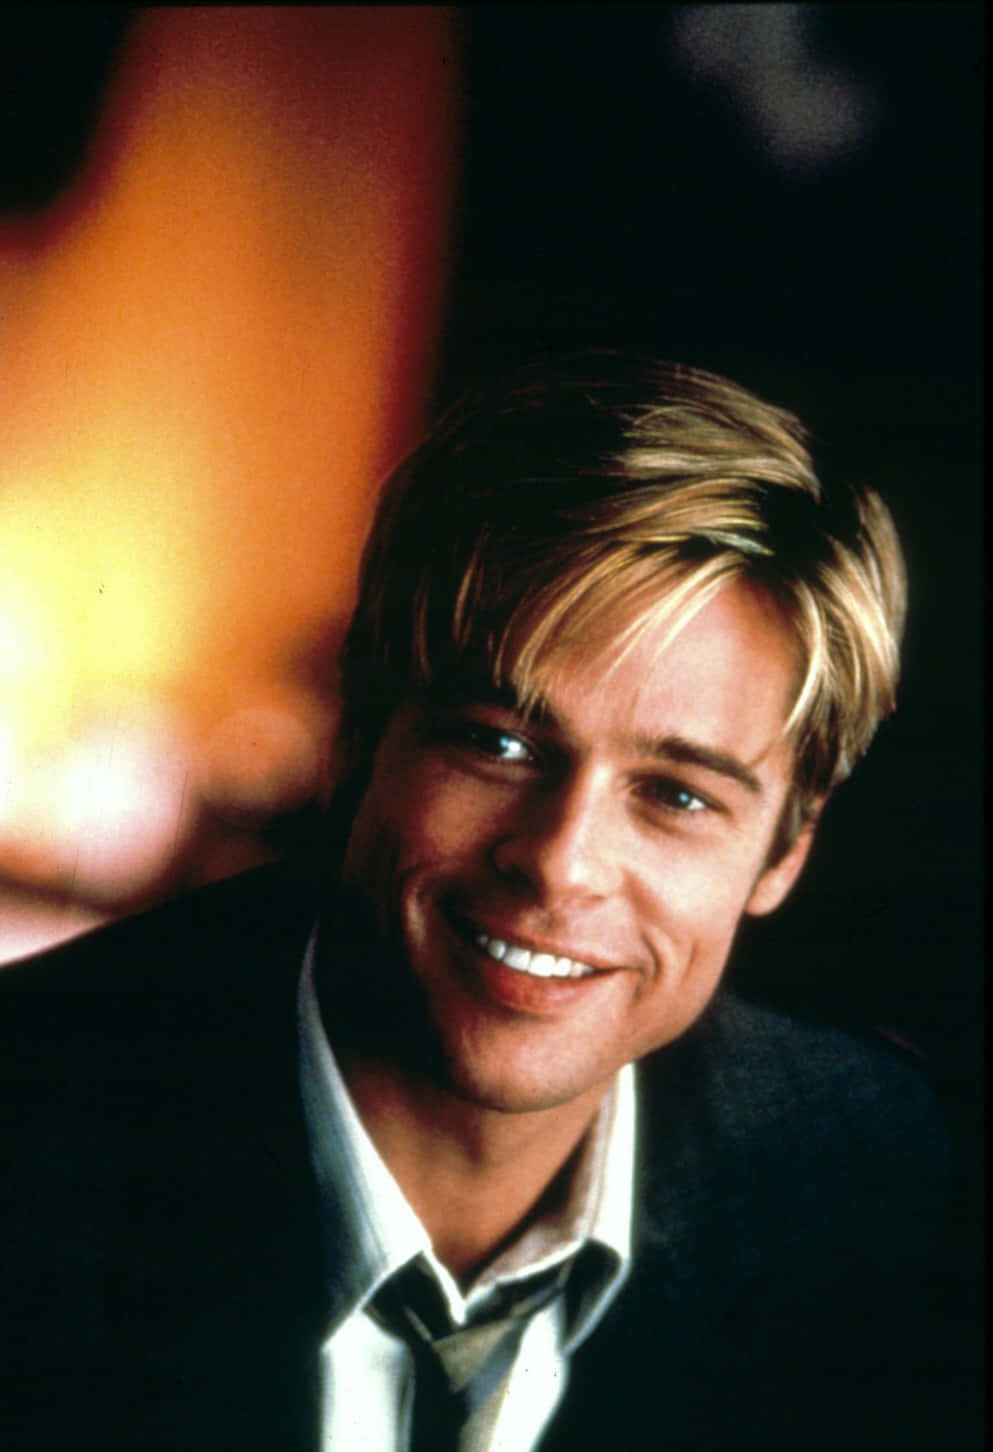 Hollywood icon Brad Pitt